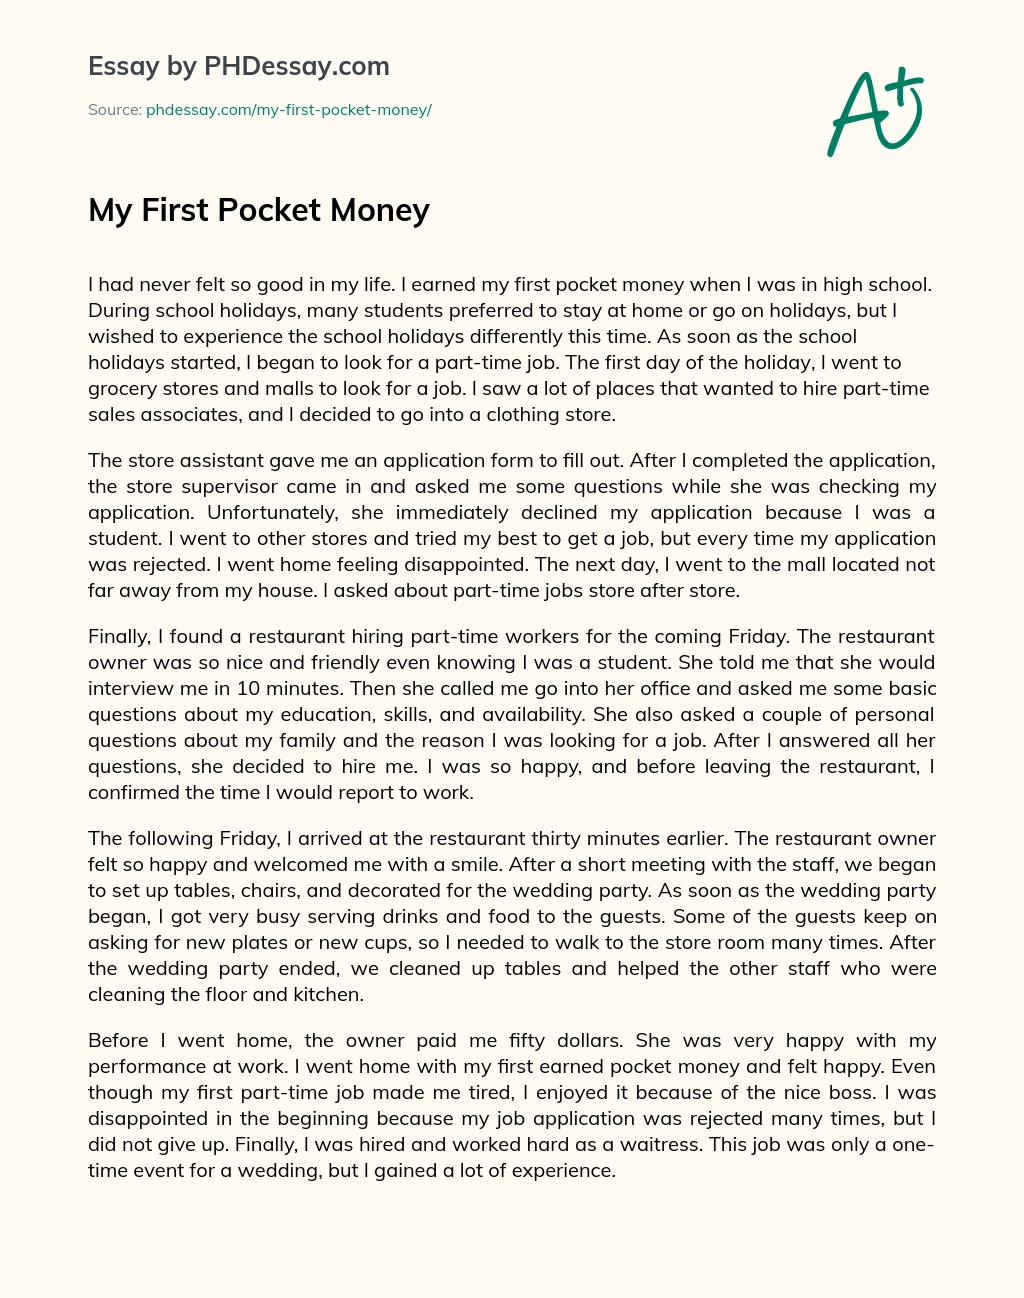 write an essay on my first pocket money